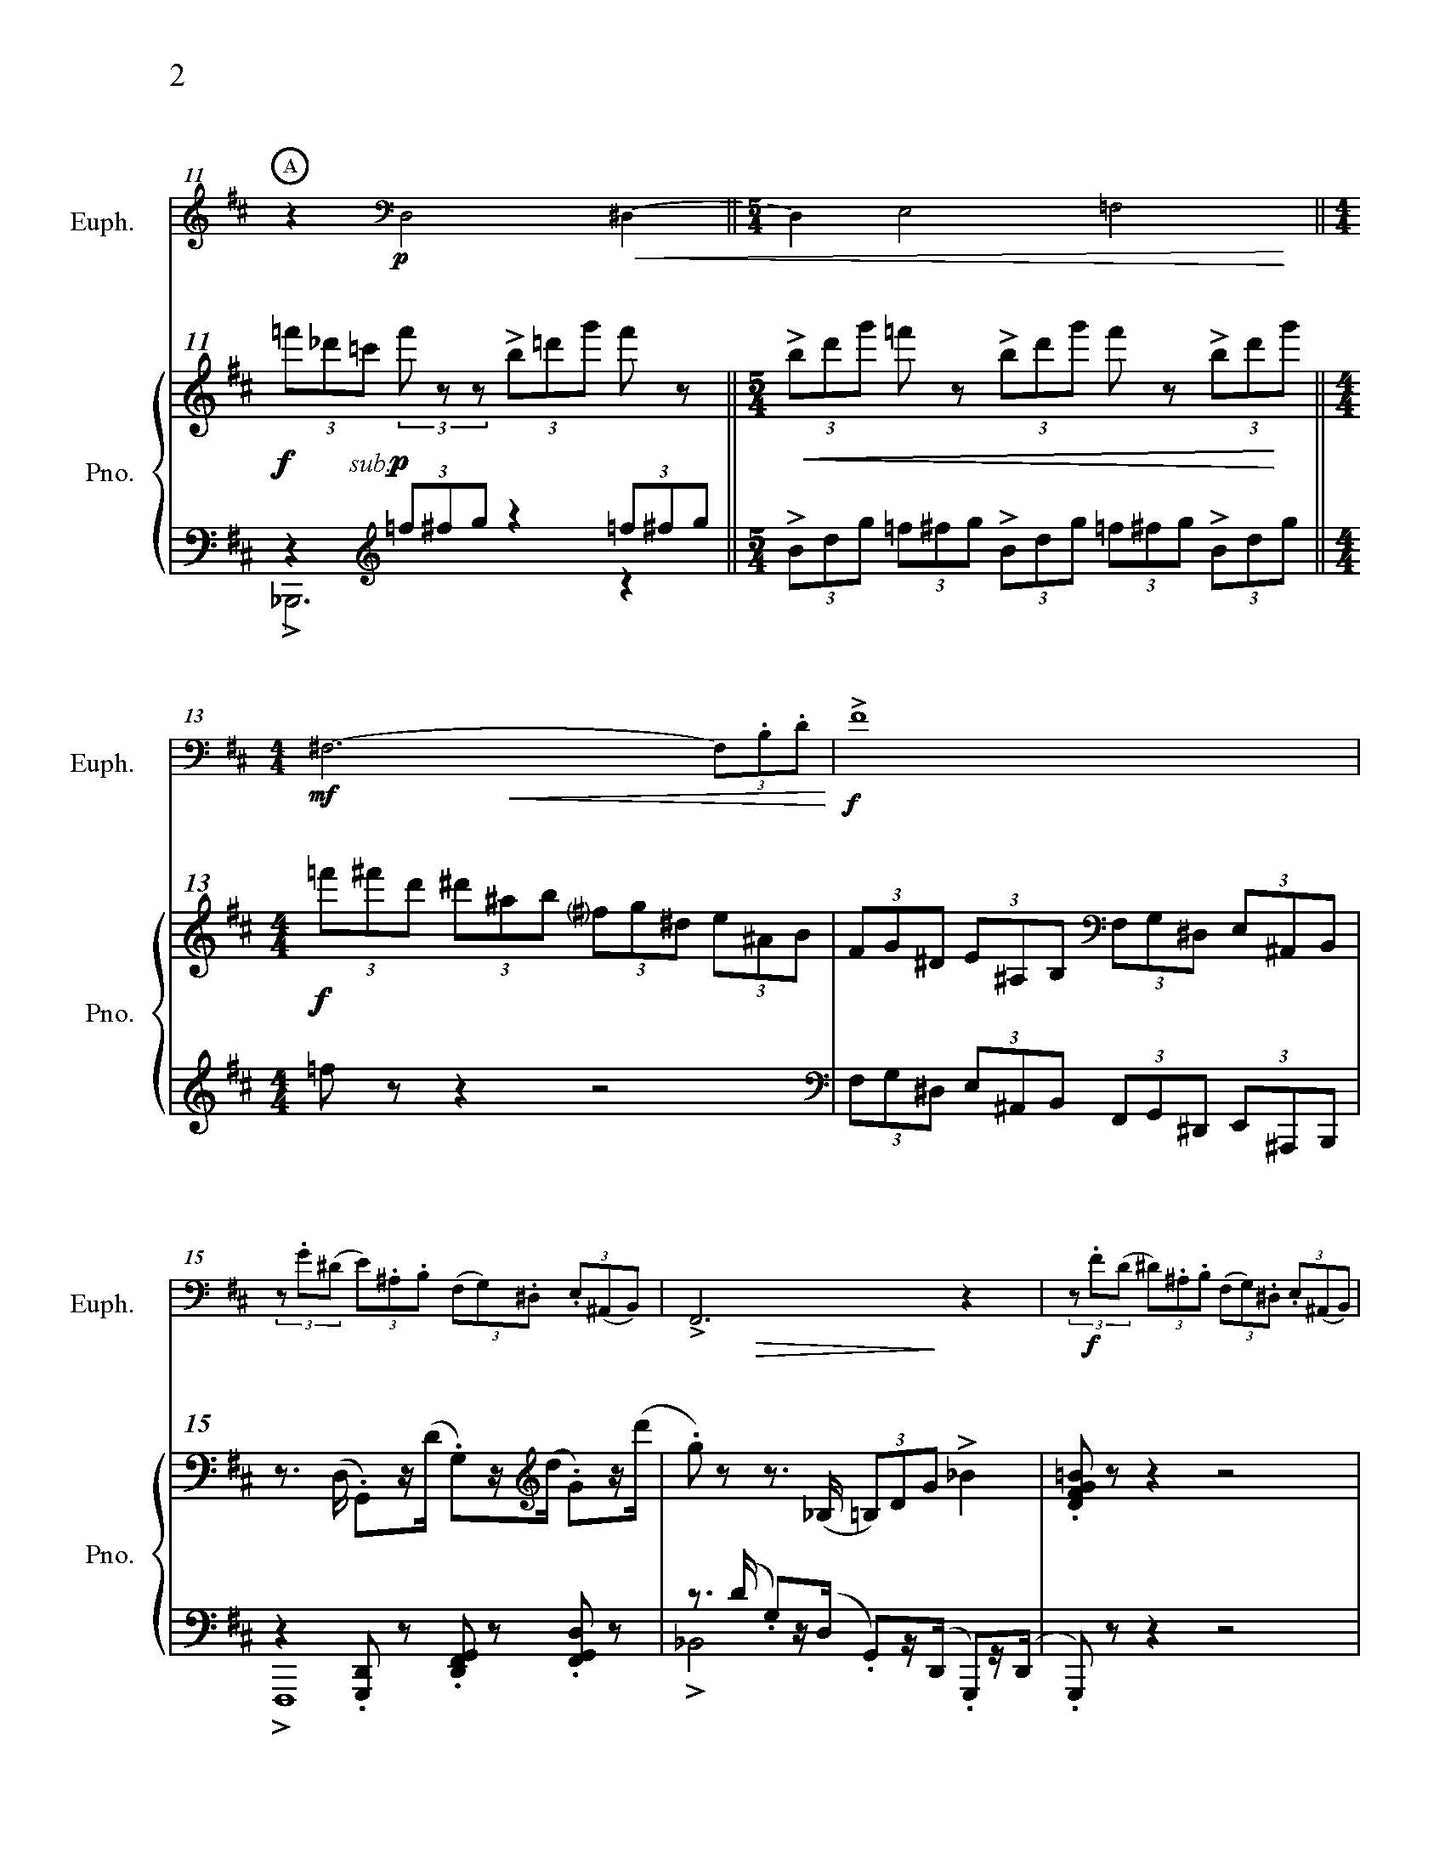 Stephenson, James - Sonata for Euphonium